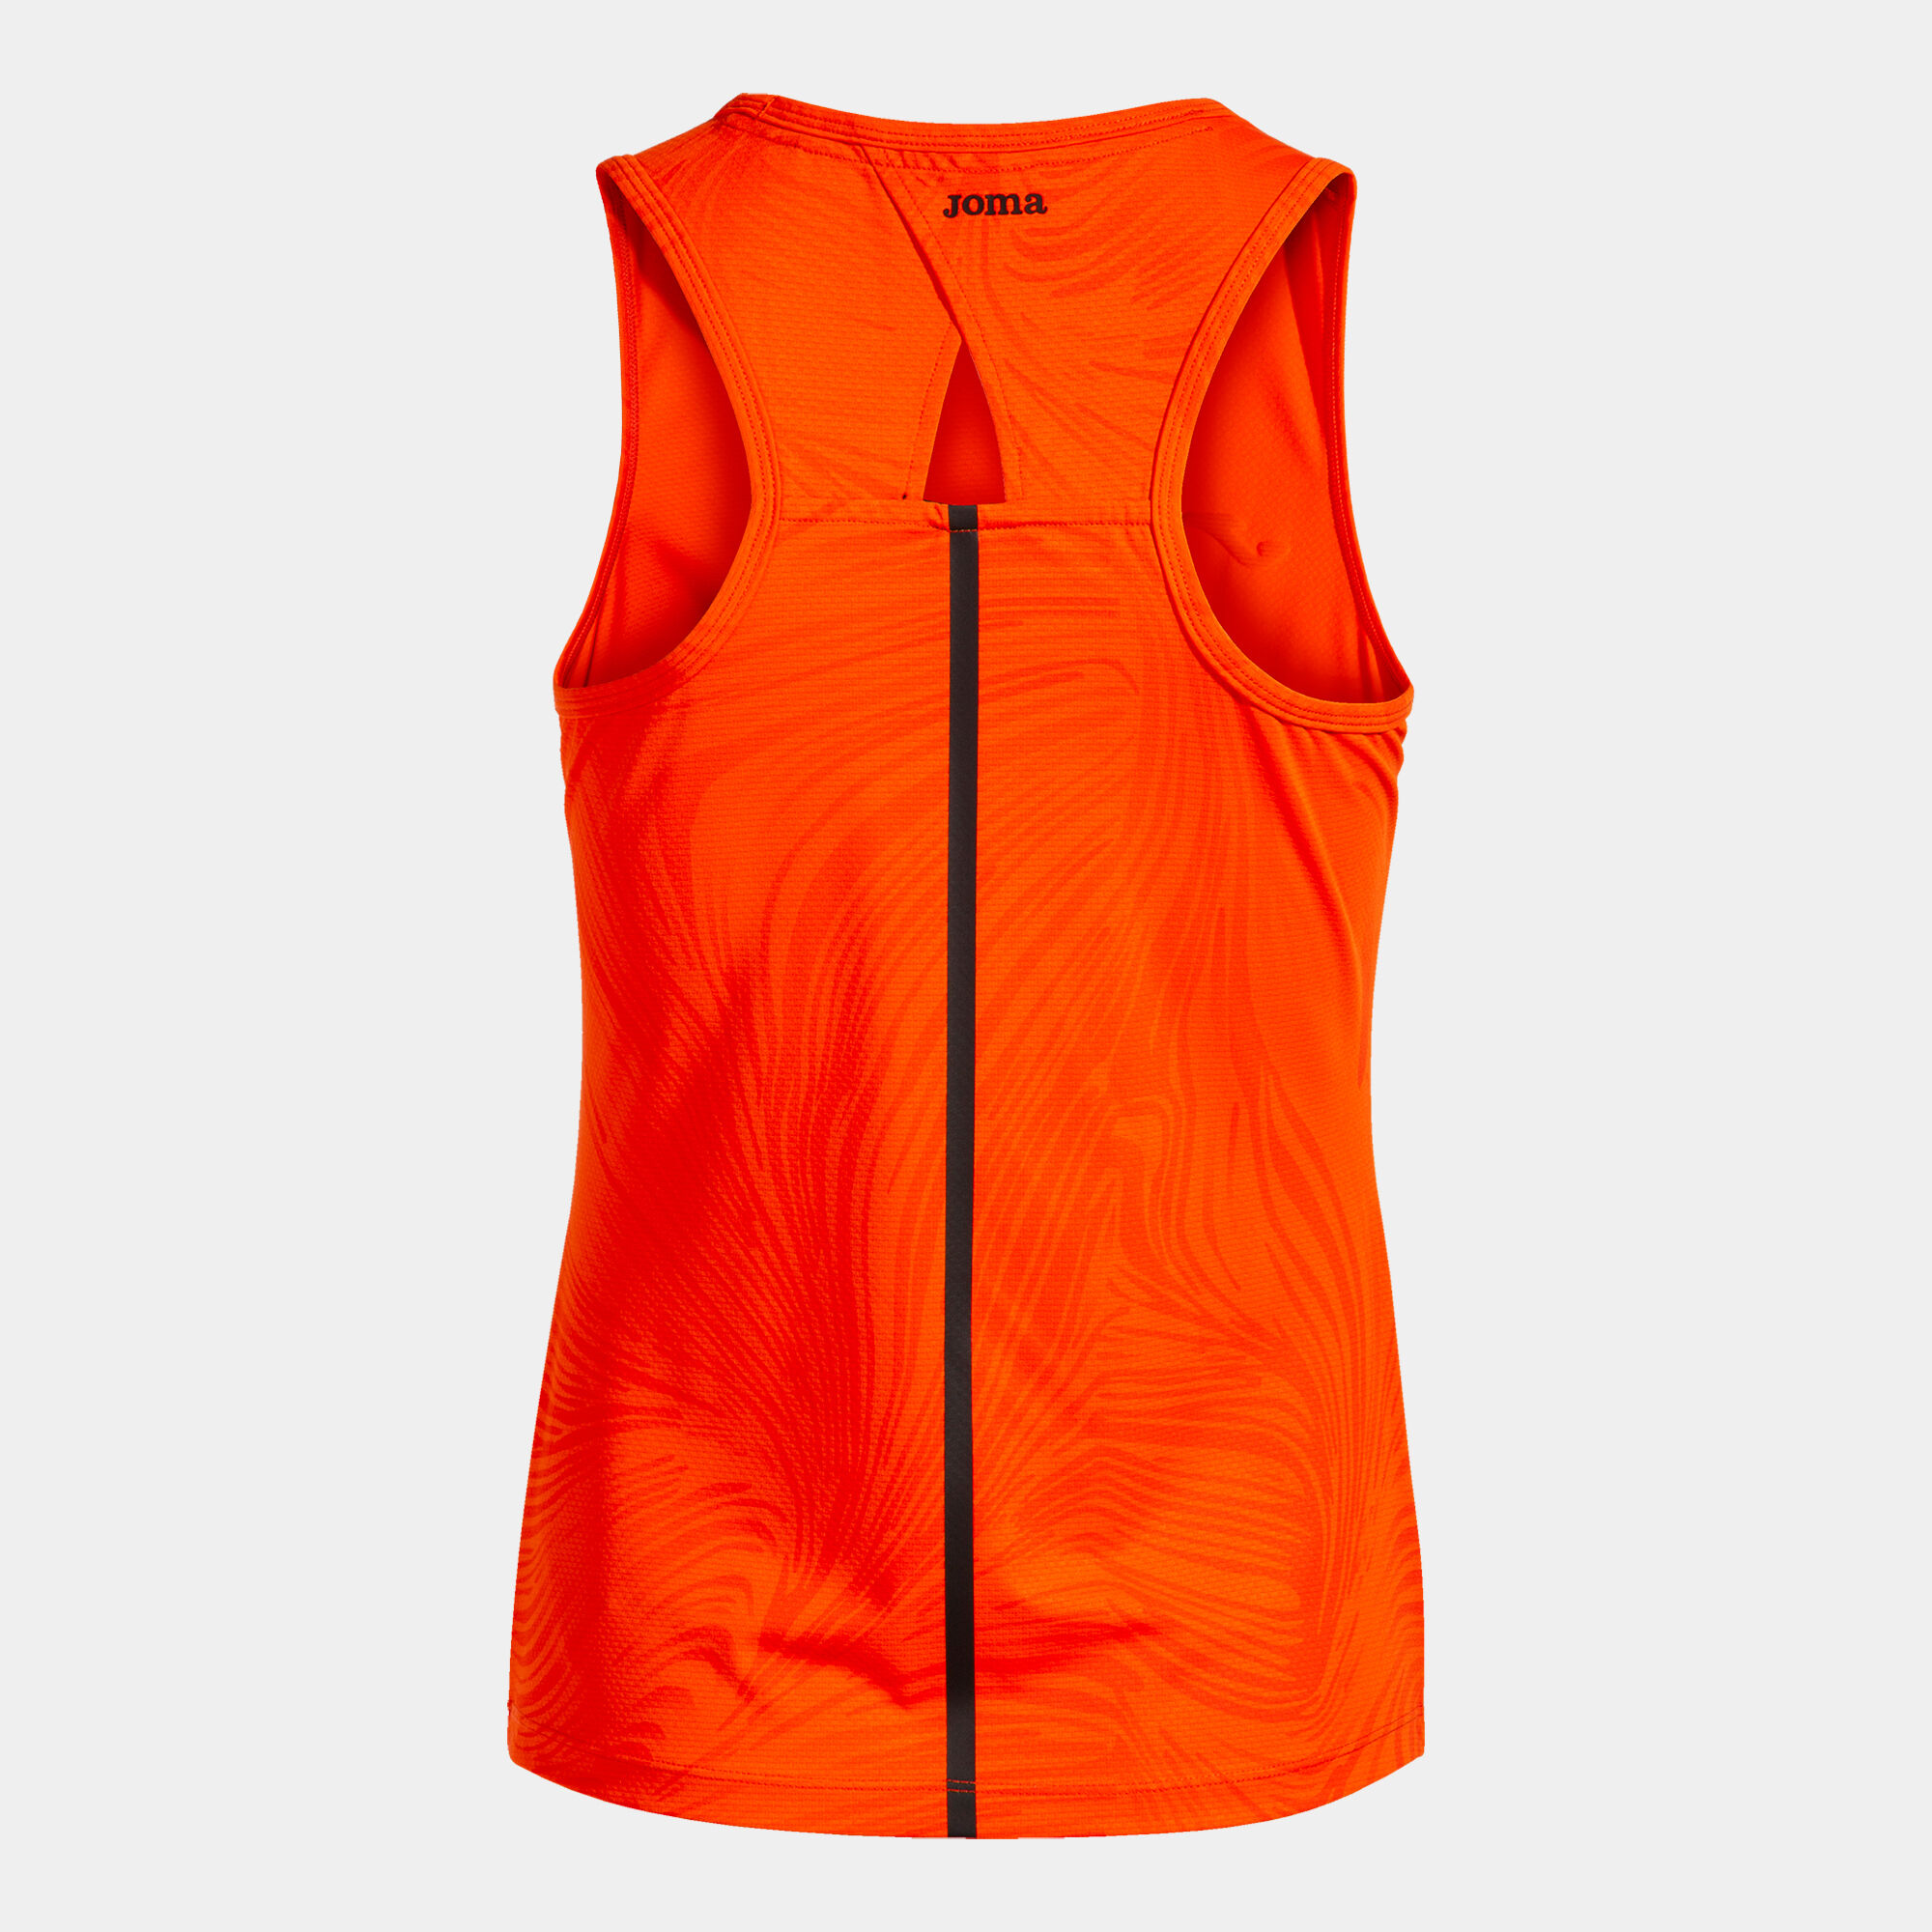 Sleeveless t-shirt woman Challenge orange